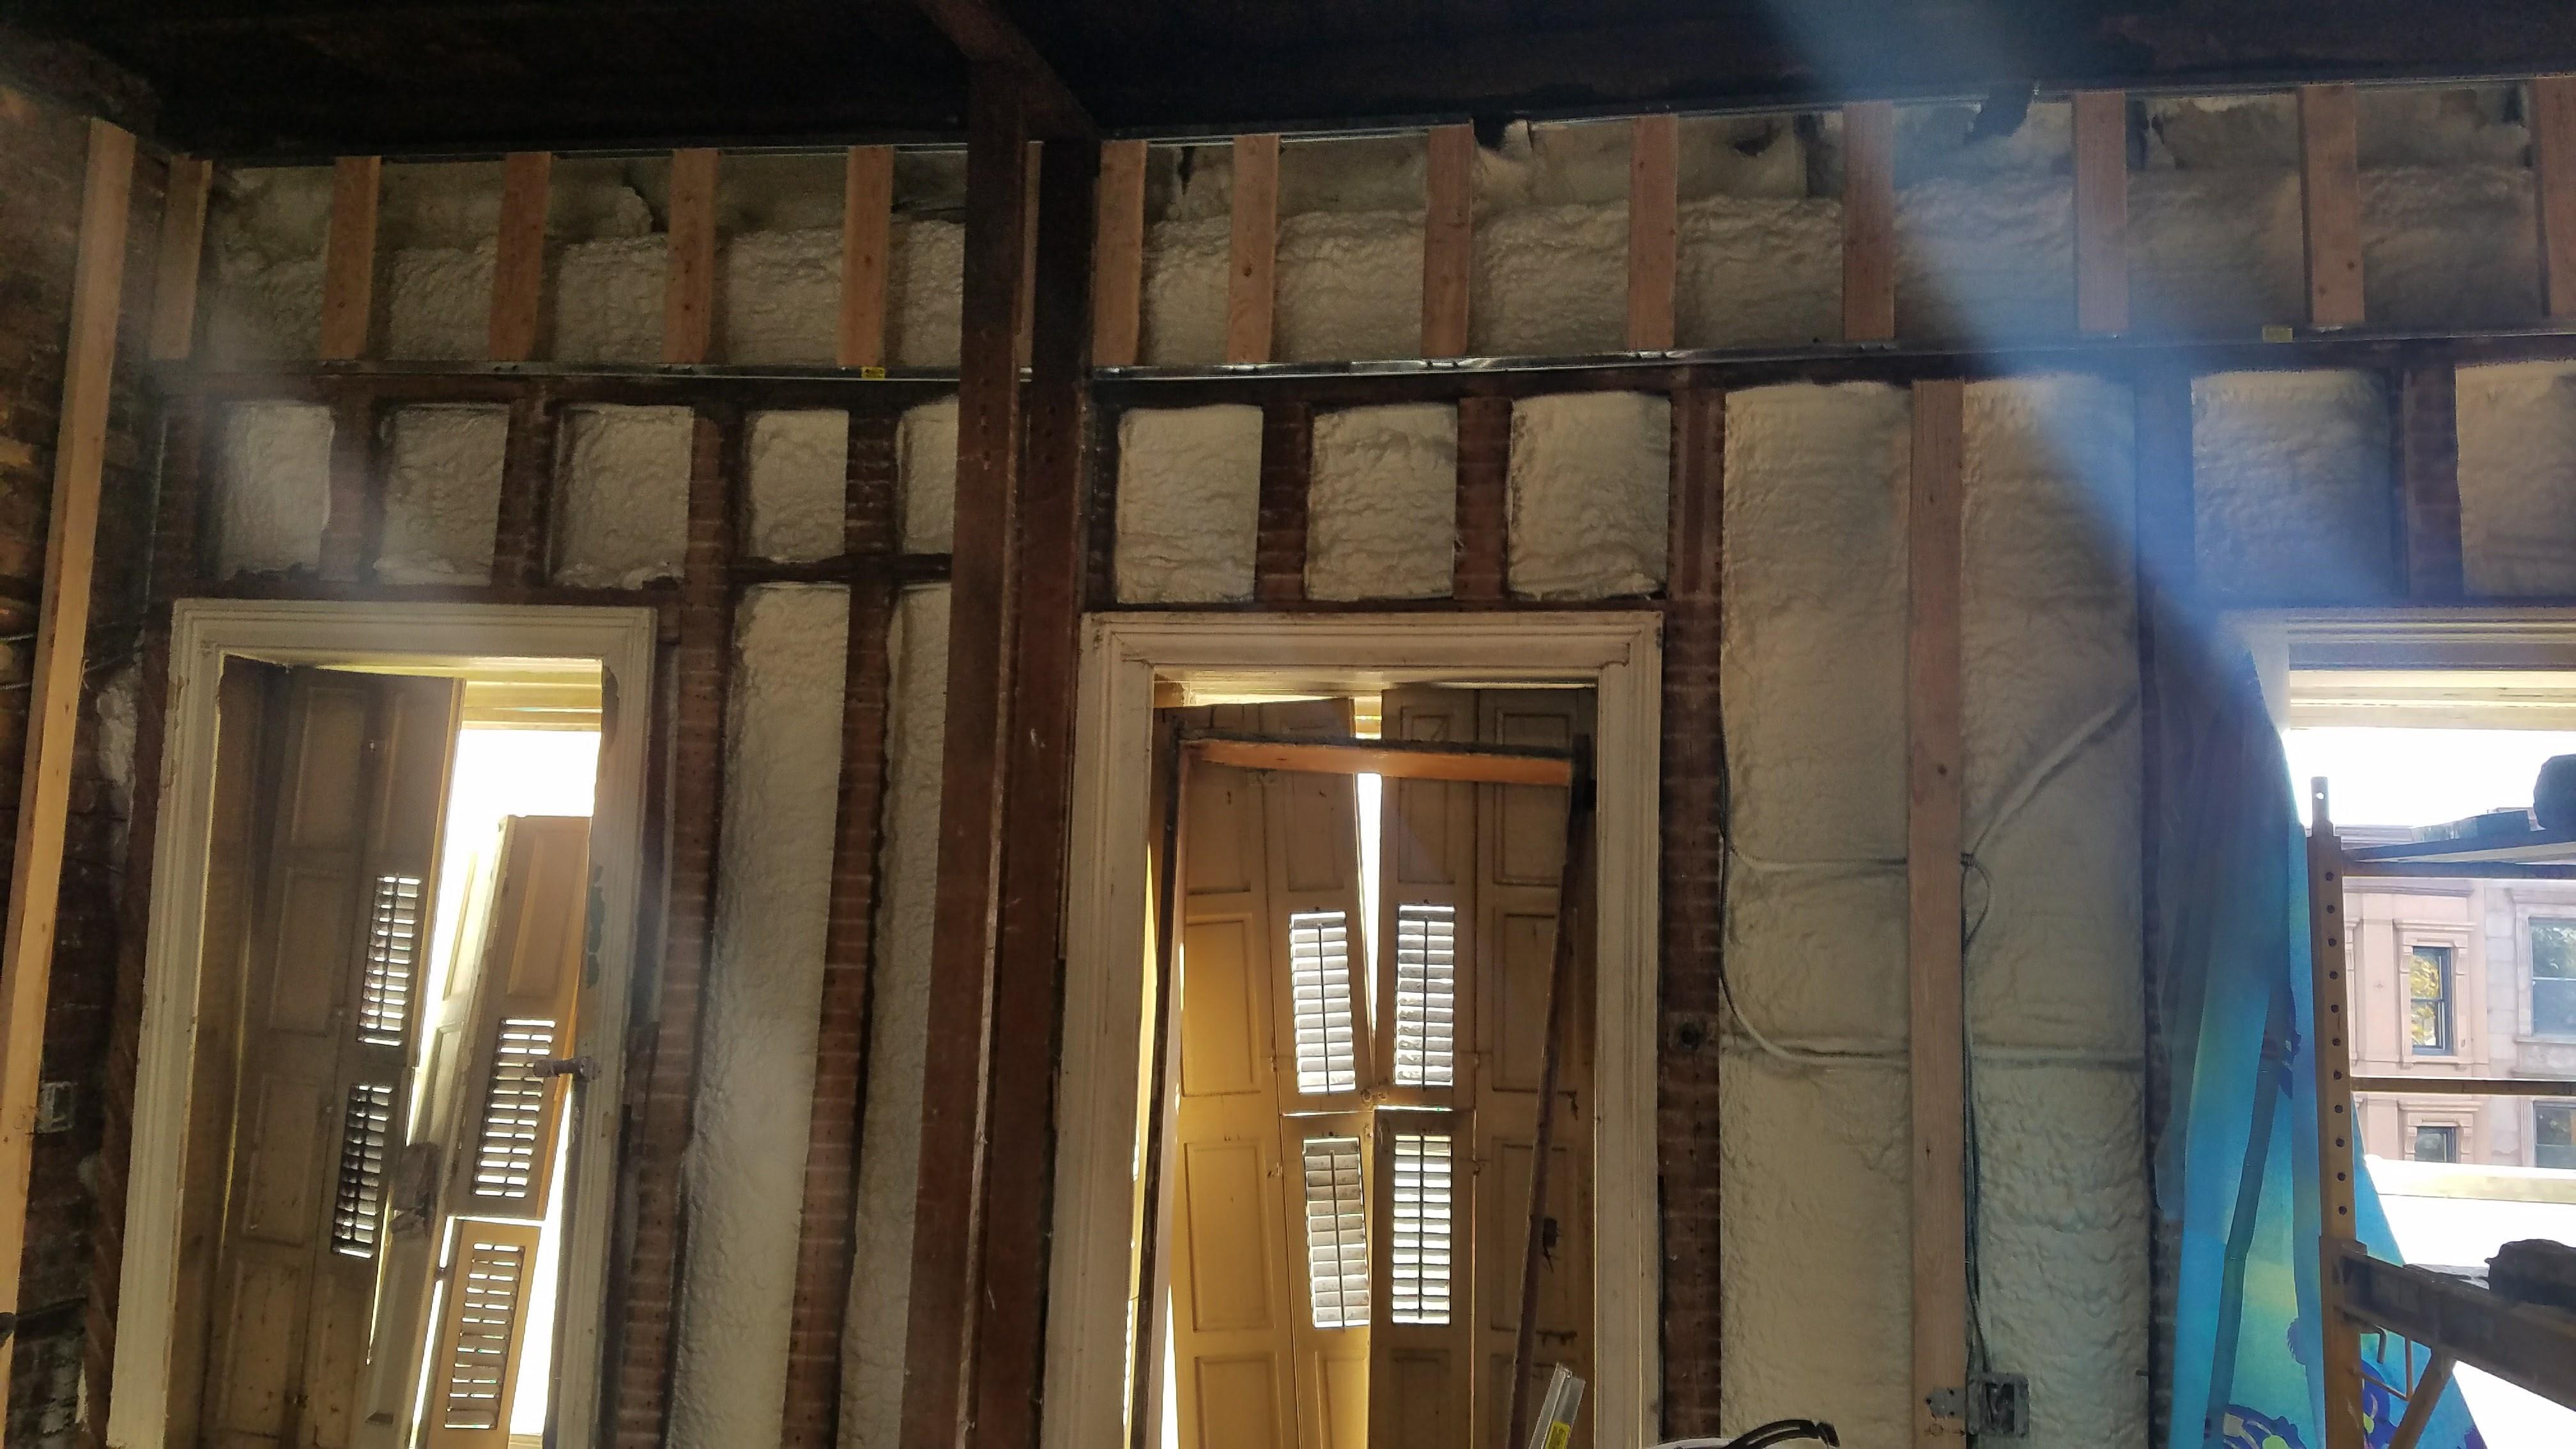 Insulation For Walls, Ceiling, Basement - MacDonough St, Brooklyn, NY 11216